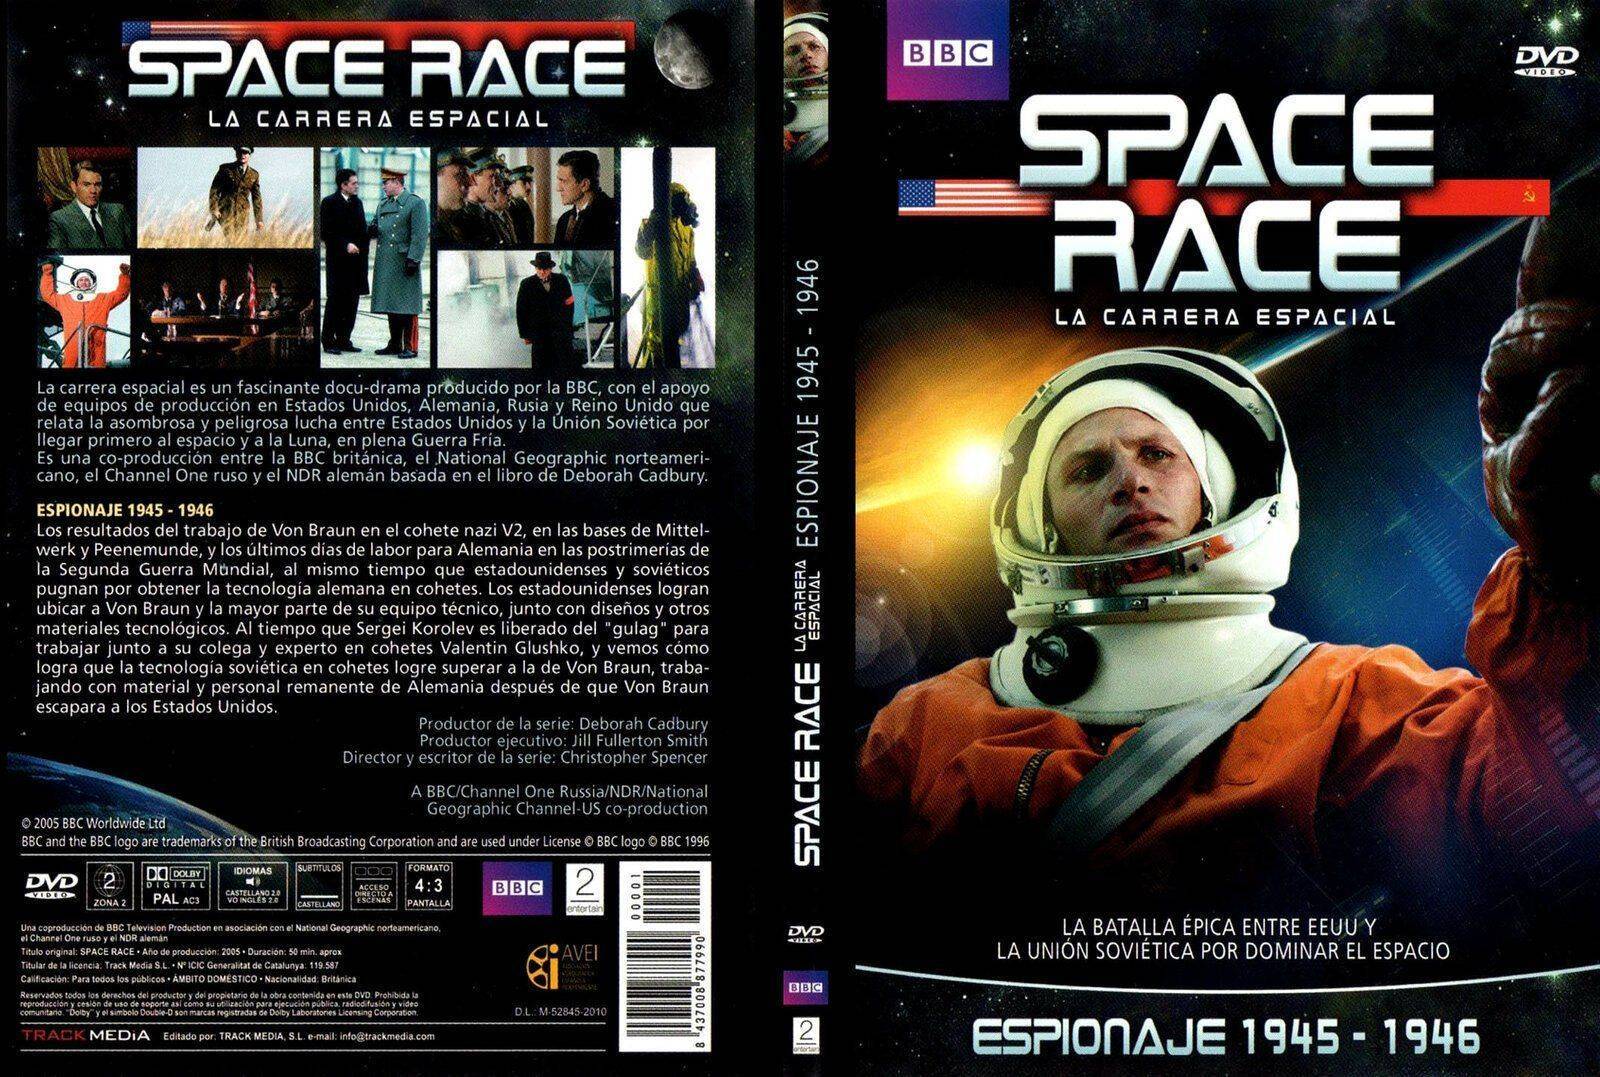 Space Race. La Carrera Espacial (BBC)(2005) 01. Espionaje 1945-1946.jpg